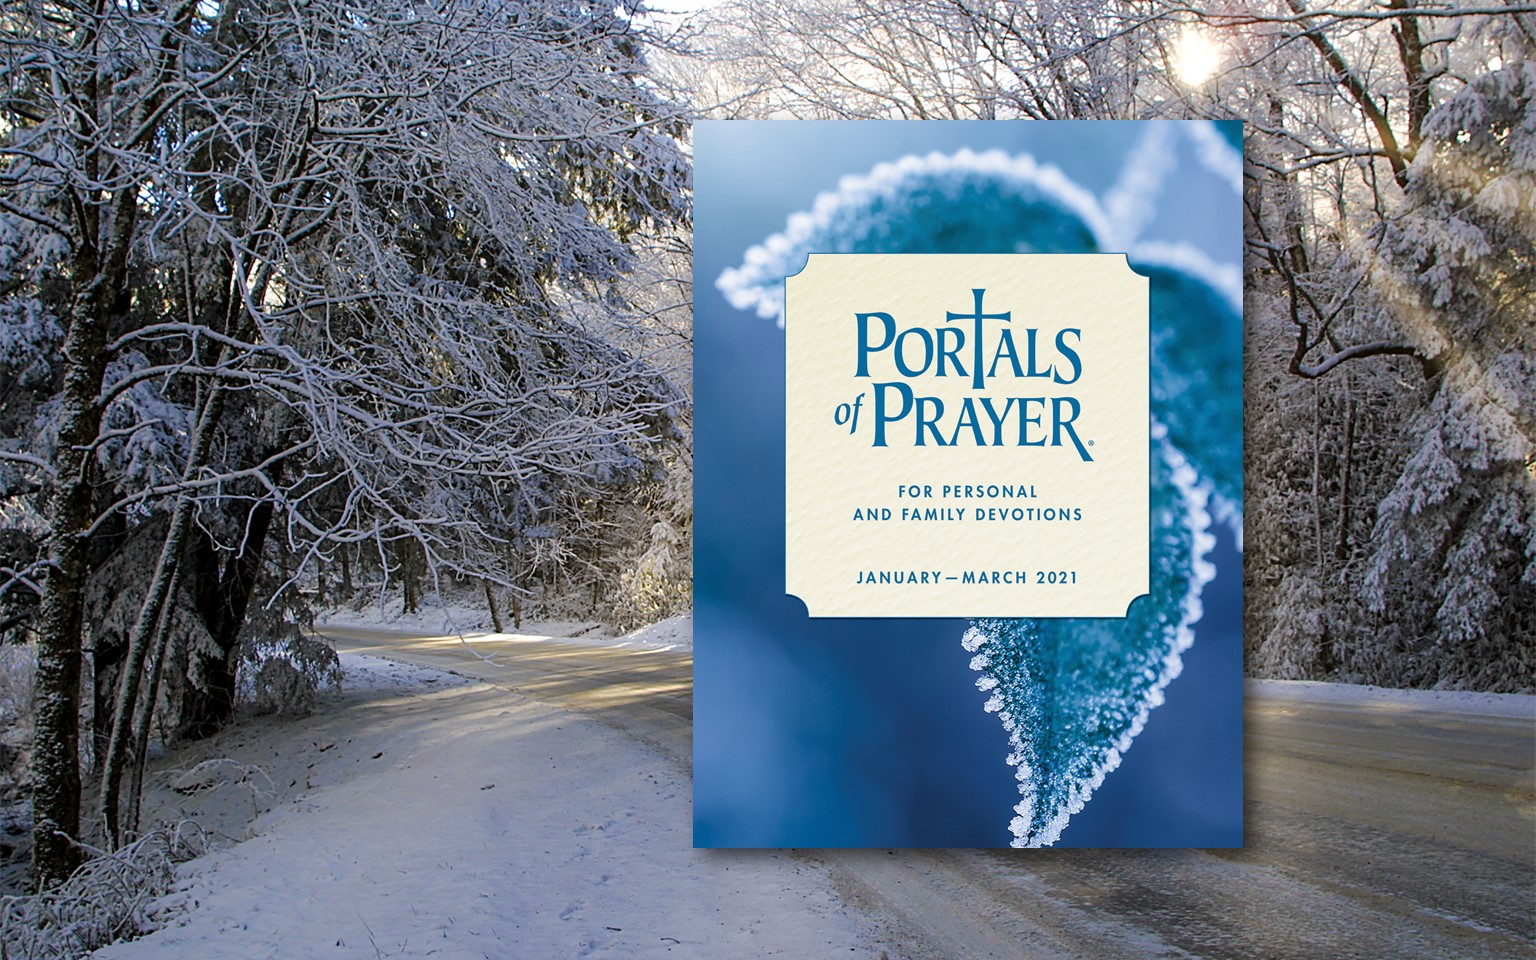 Next Issue of Portals of Prayer